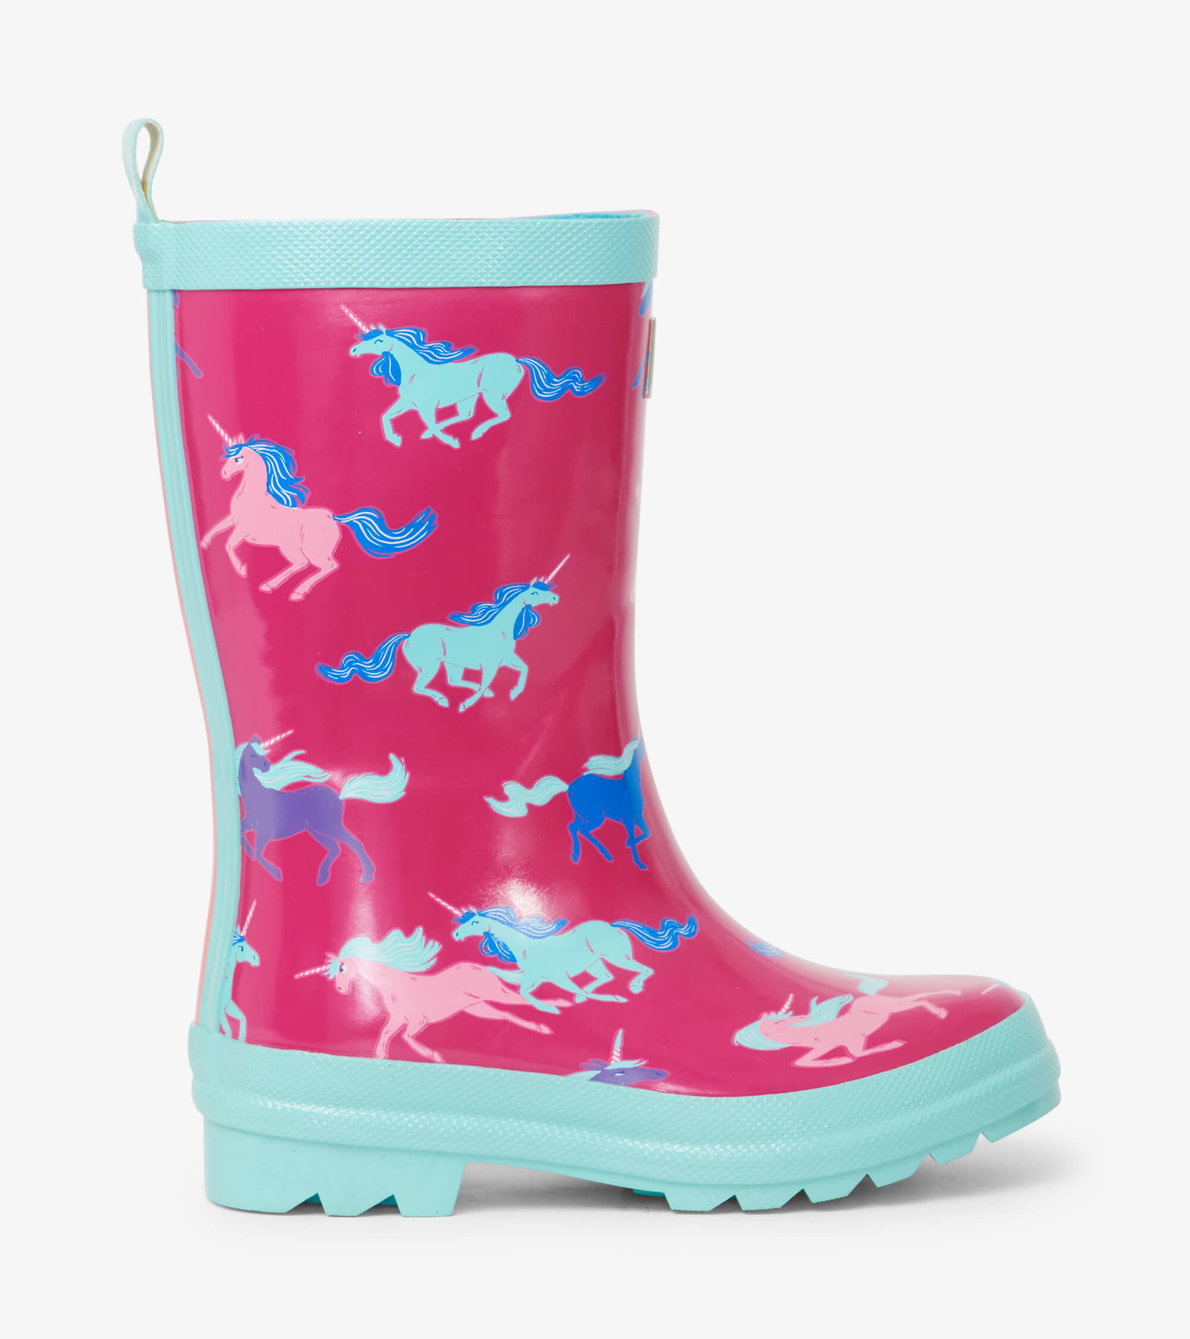 View larger image of Frolicking Unicorns Shiny Rain Boots